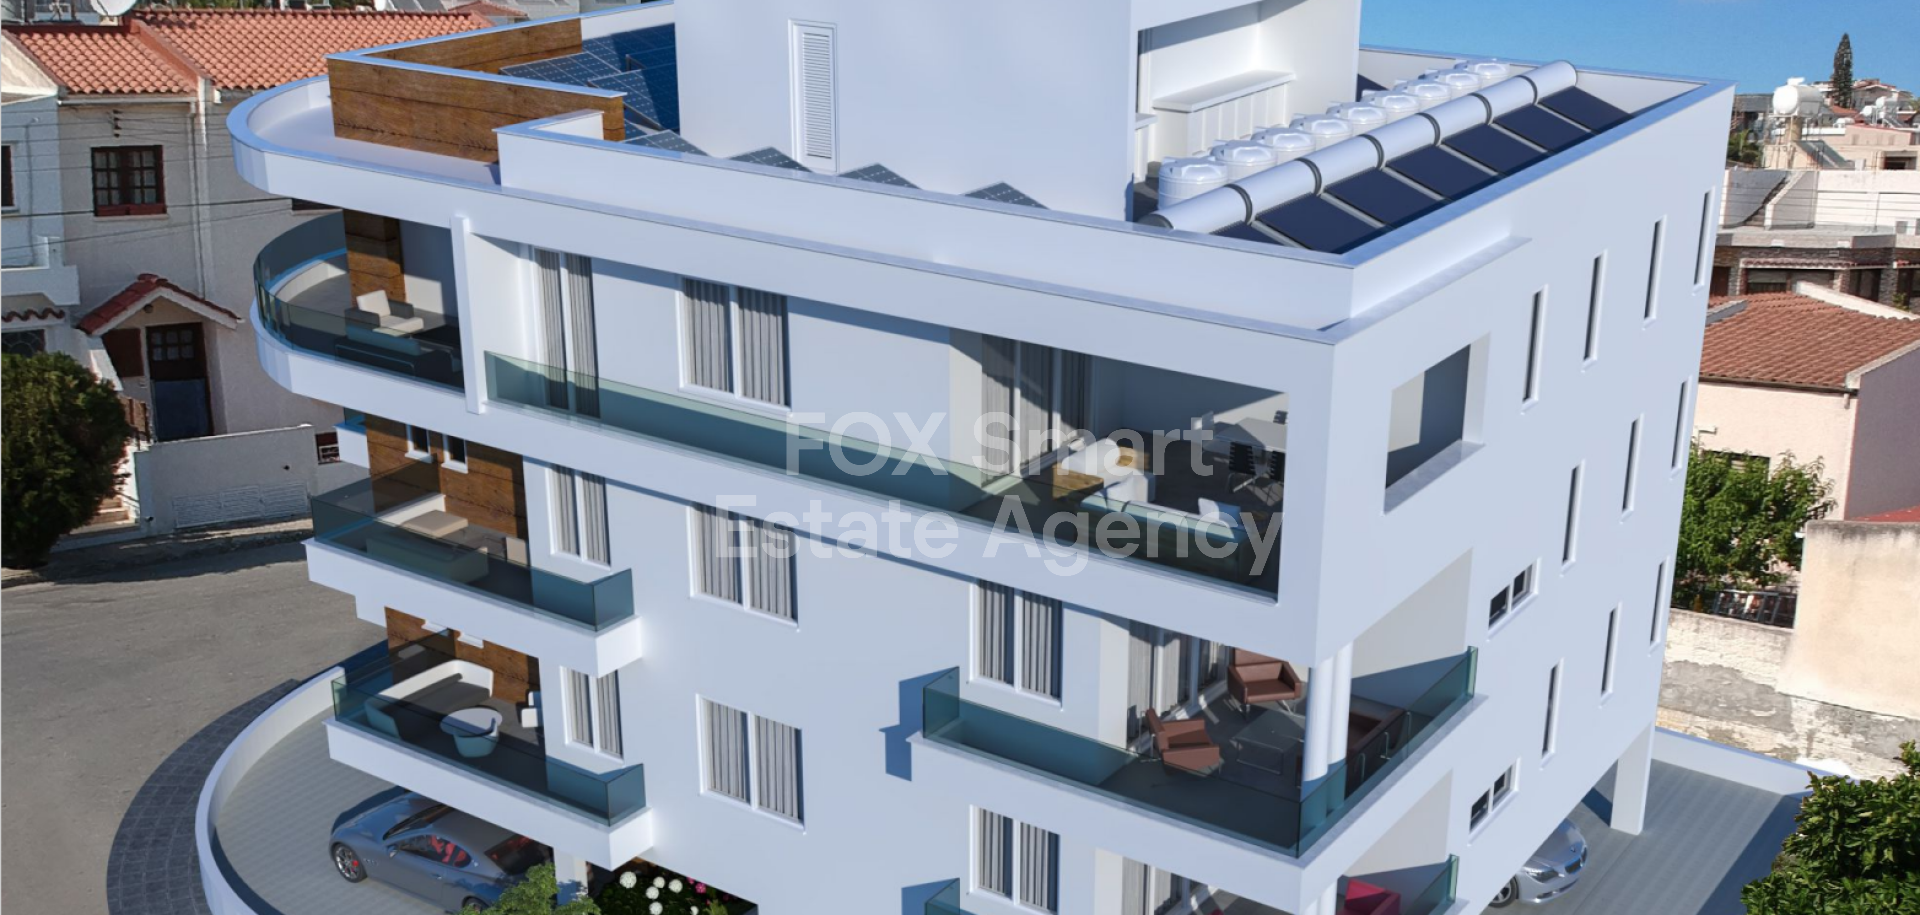 Apartment, For Sale, Larnaca, Agios Nikolaos  1 Bedroom 1 Ba.....